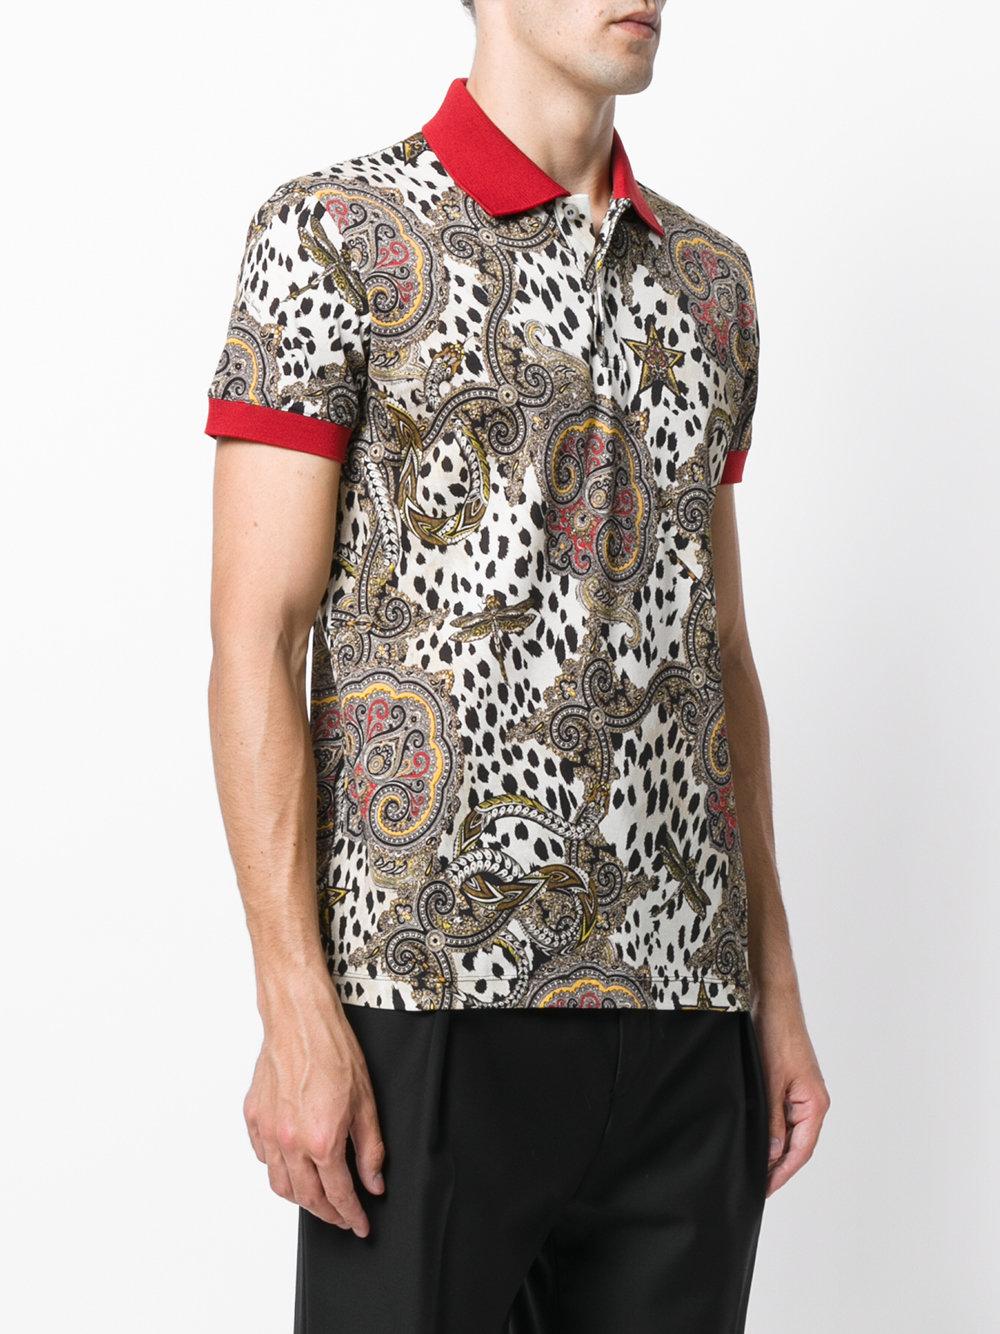 Roberto Cavalli Cotton Leopard Paisley Print Polo Shirt for Men - Lyst